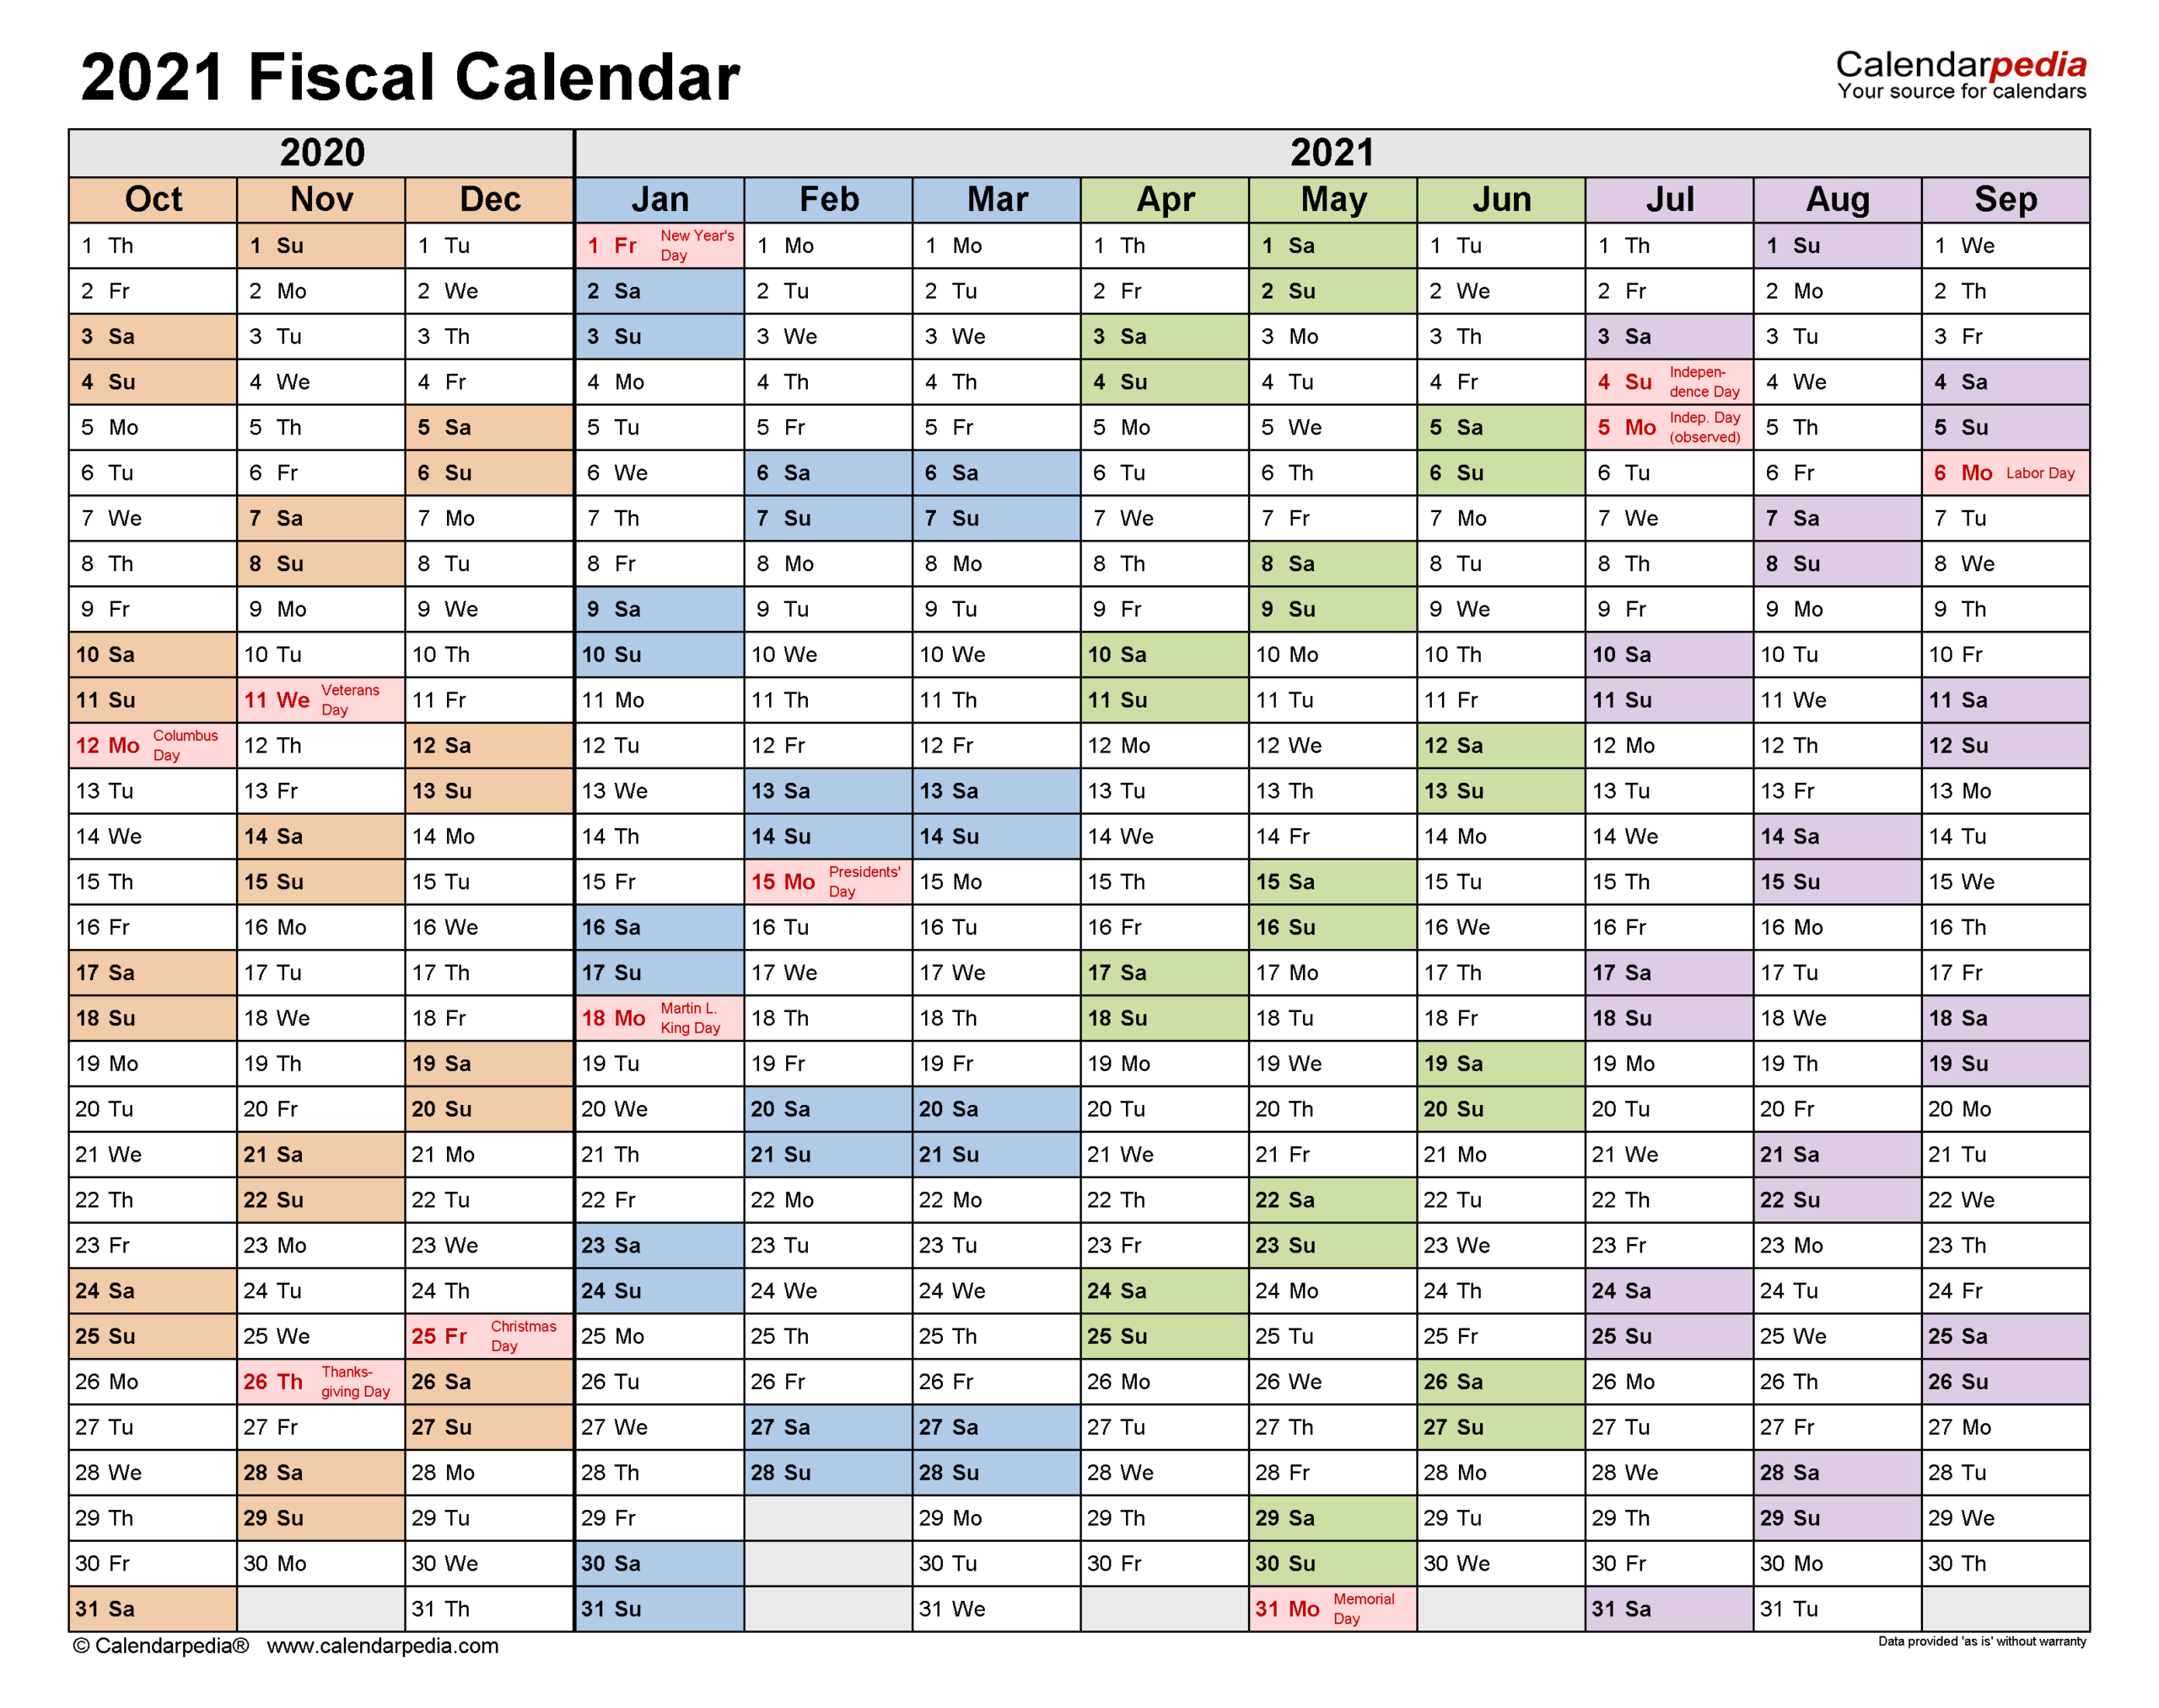 Semi Monthly Payroll Calendar 2021 In Excel | 2021 Payroll-Billing Calendar 2021